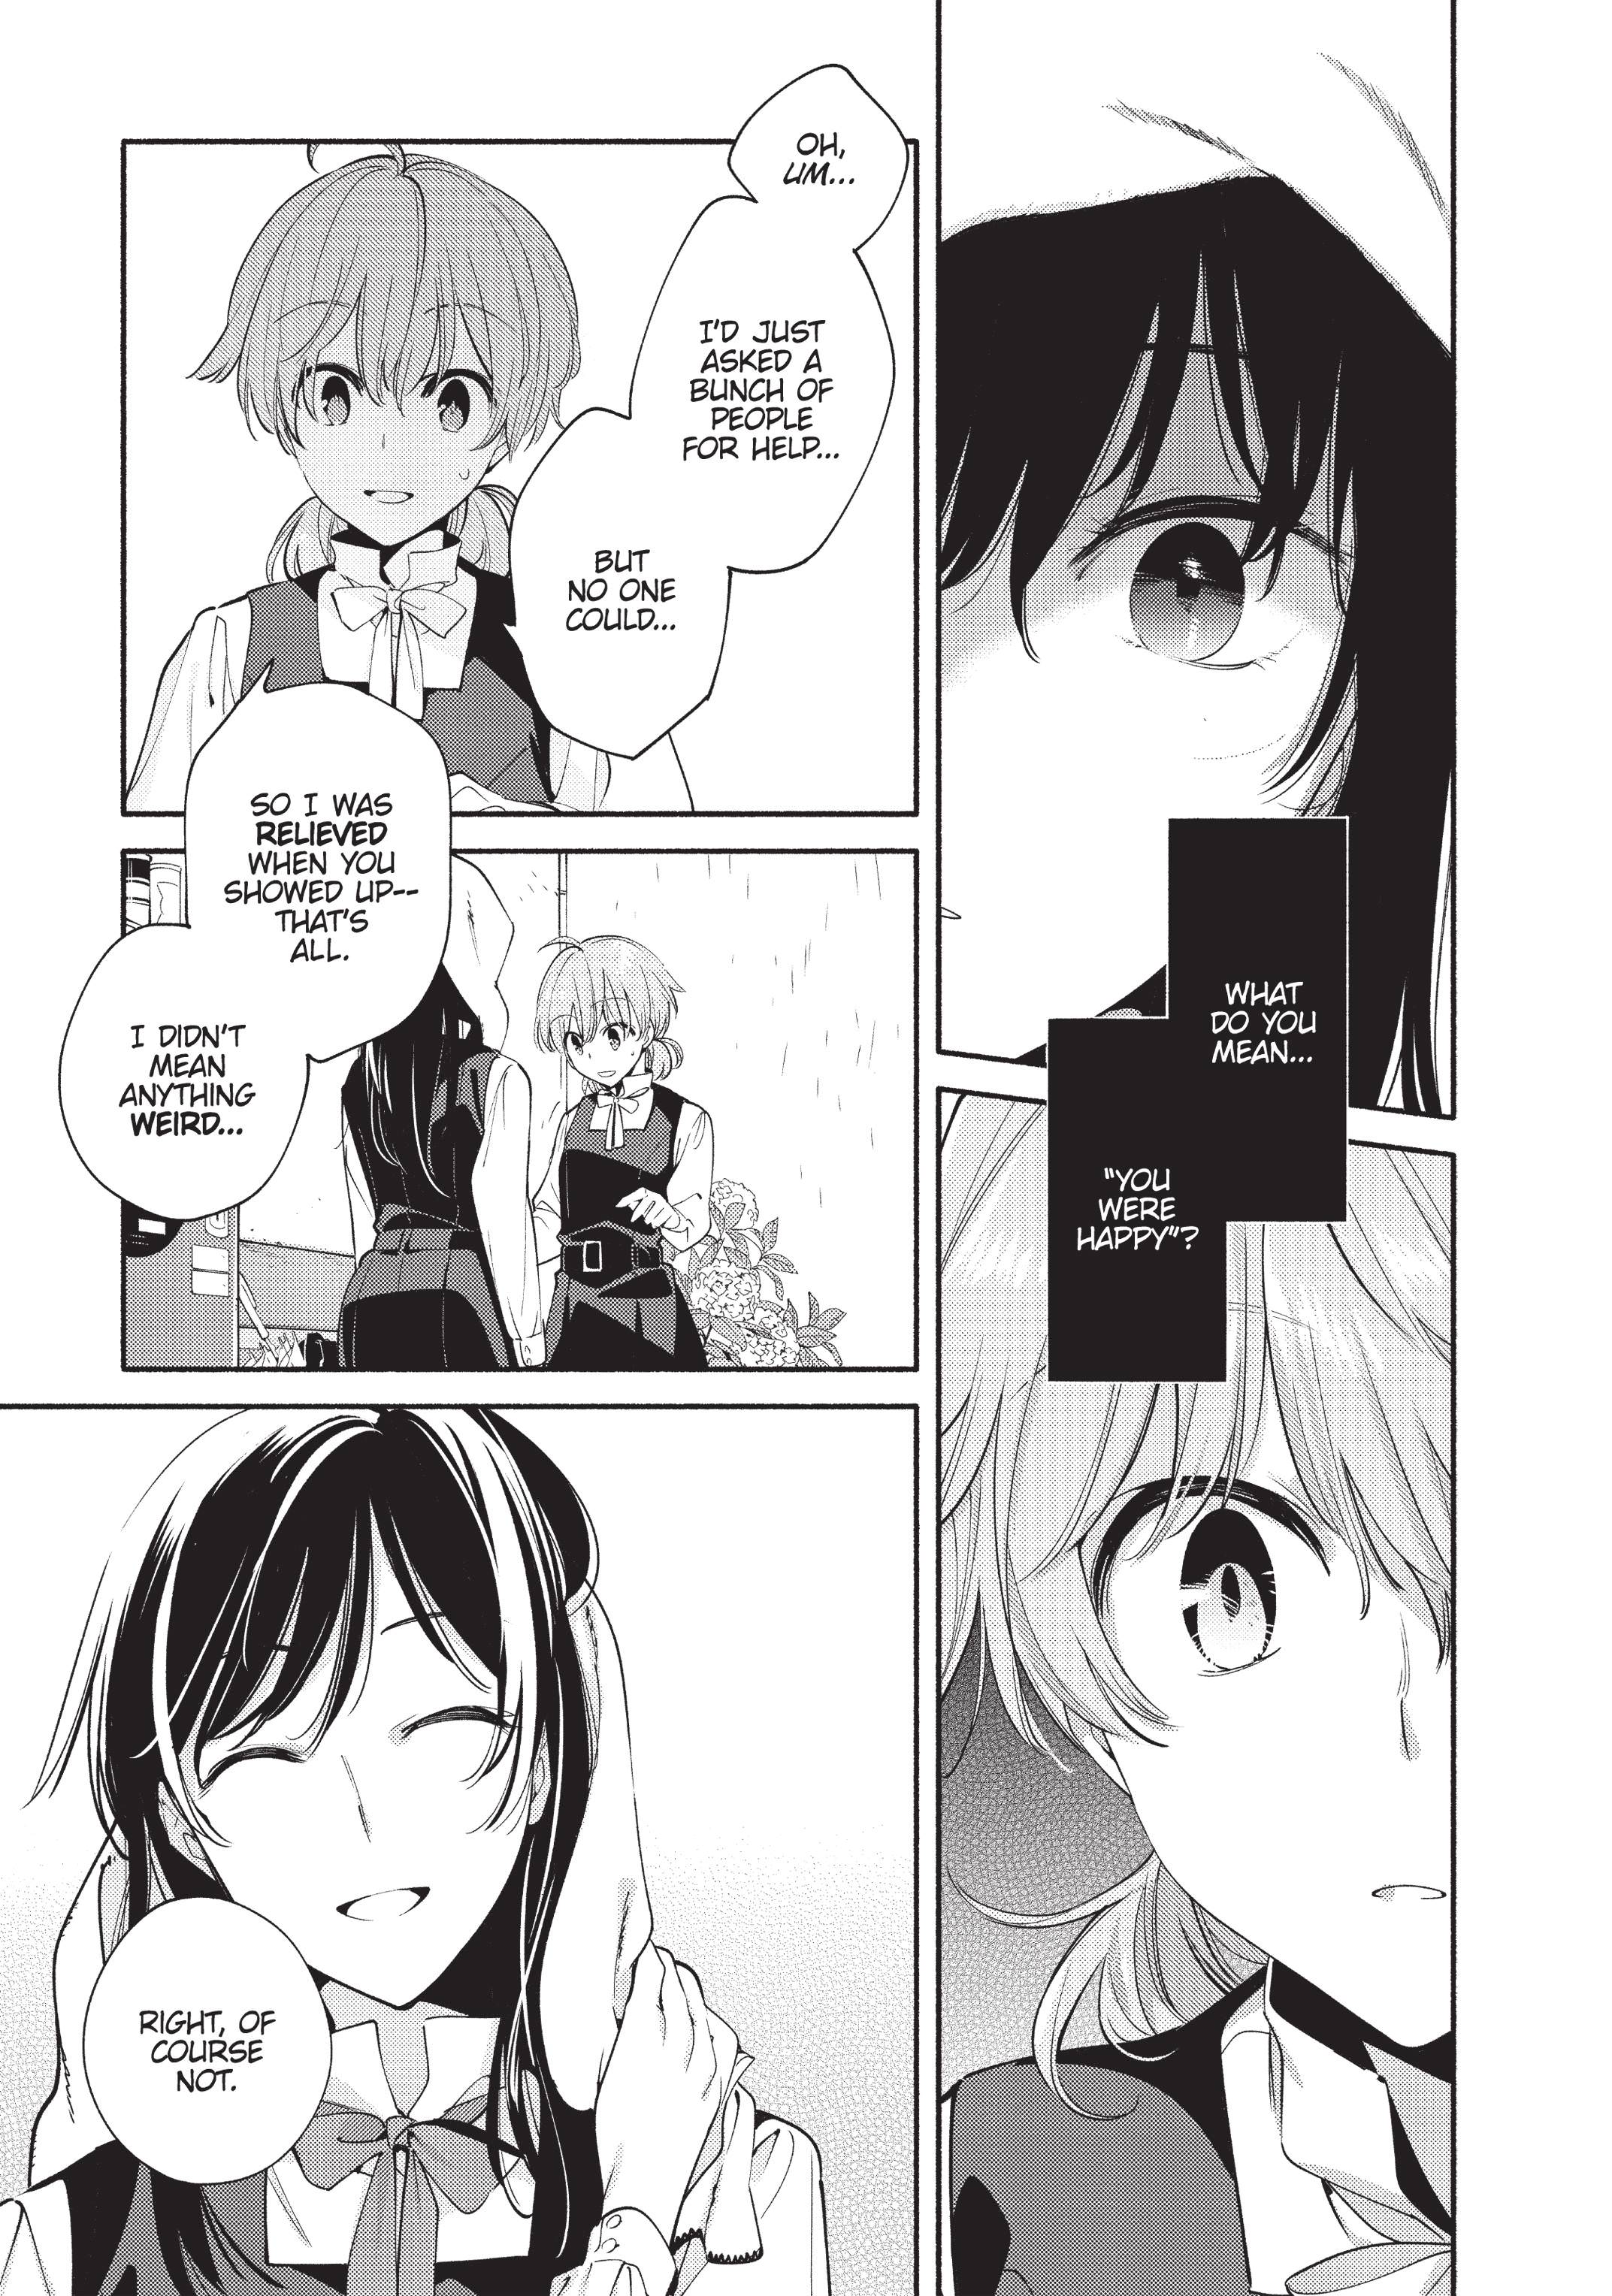 Licensed Yagate Kimi ni Naru (Bloom Into You) - Page 8 - AnimeSuki Forum